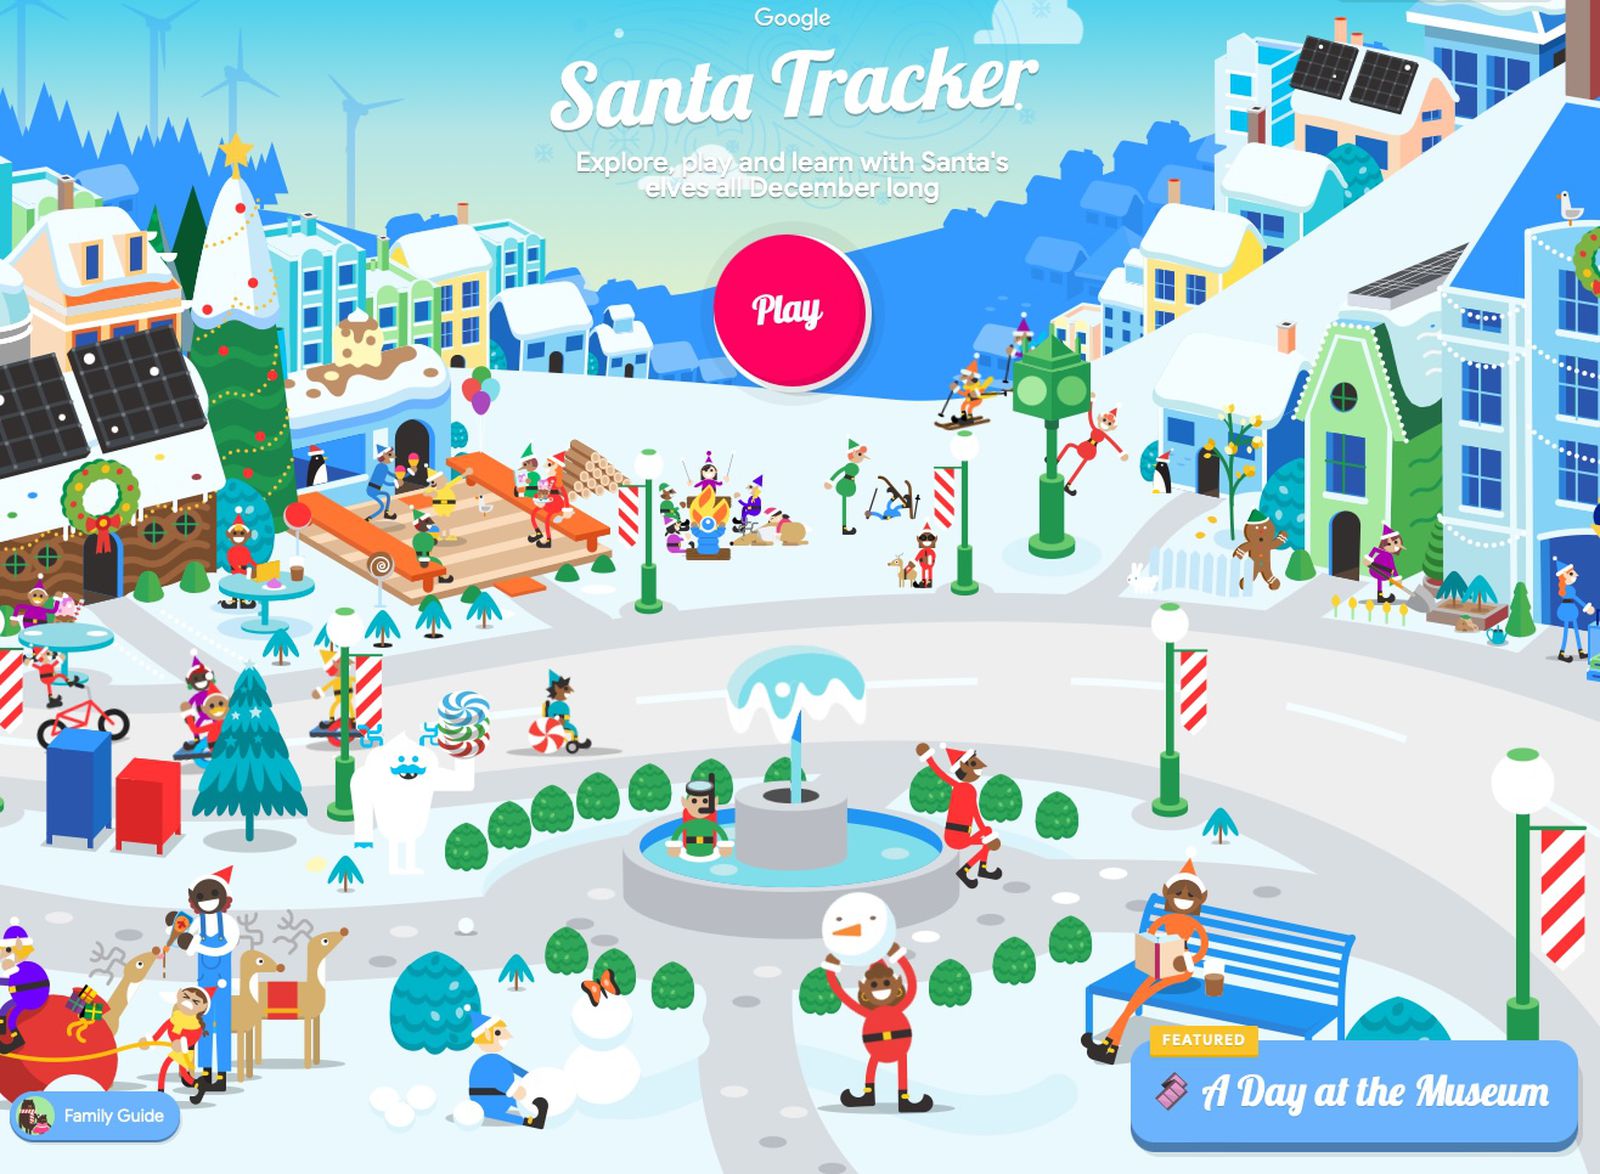 Track Santa's Journey From the North Pole Using Google's Santa